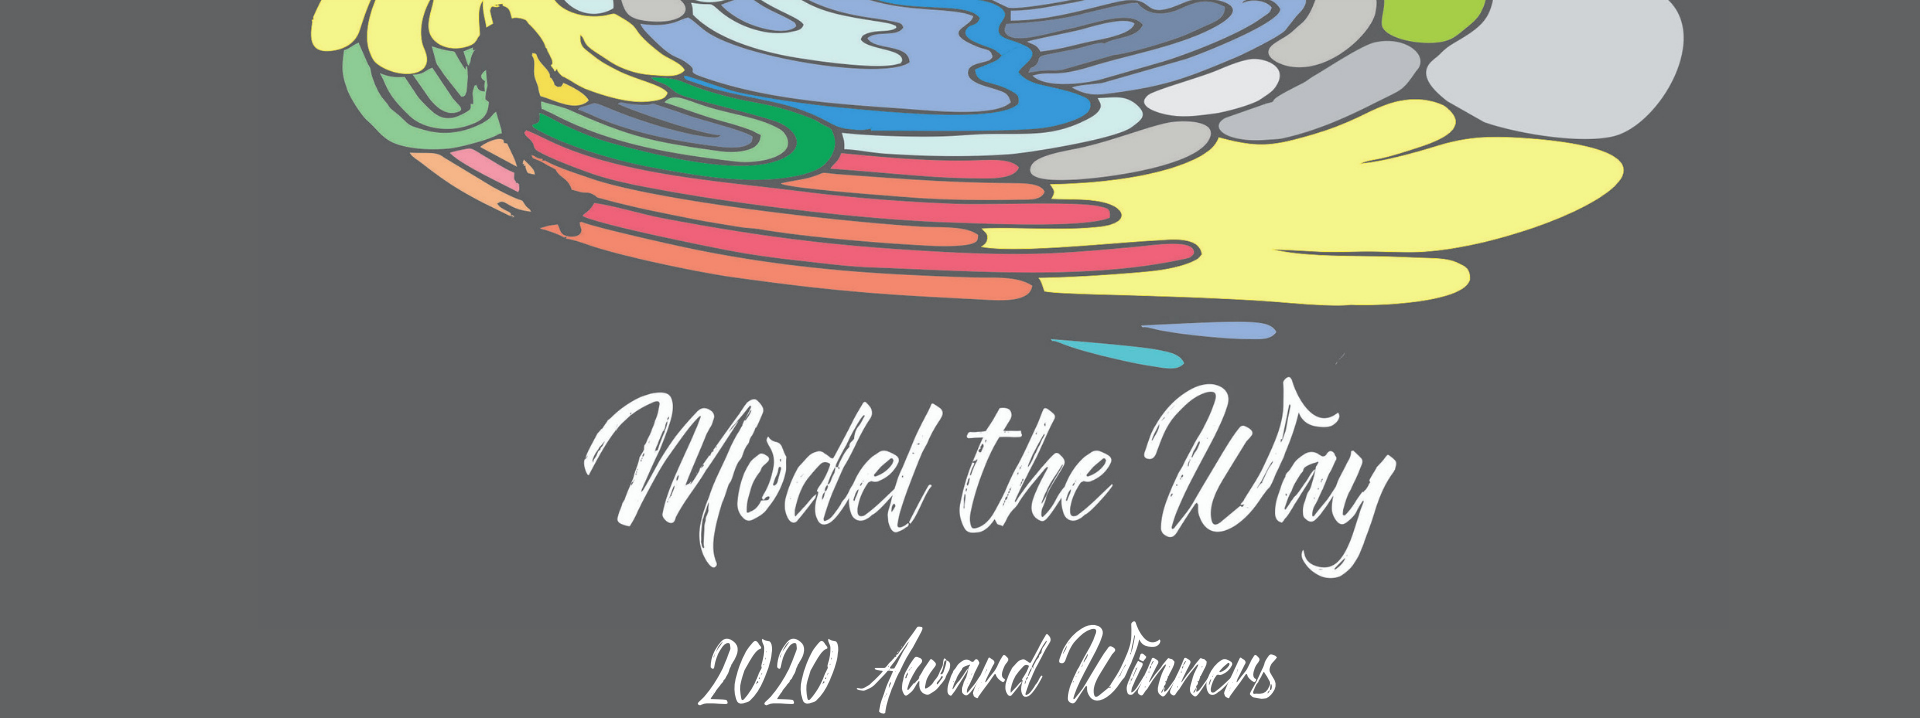 2020 Model the Way Award Winners